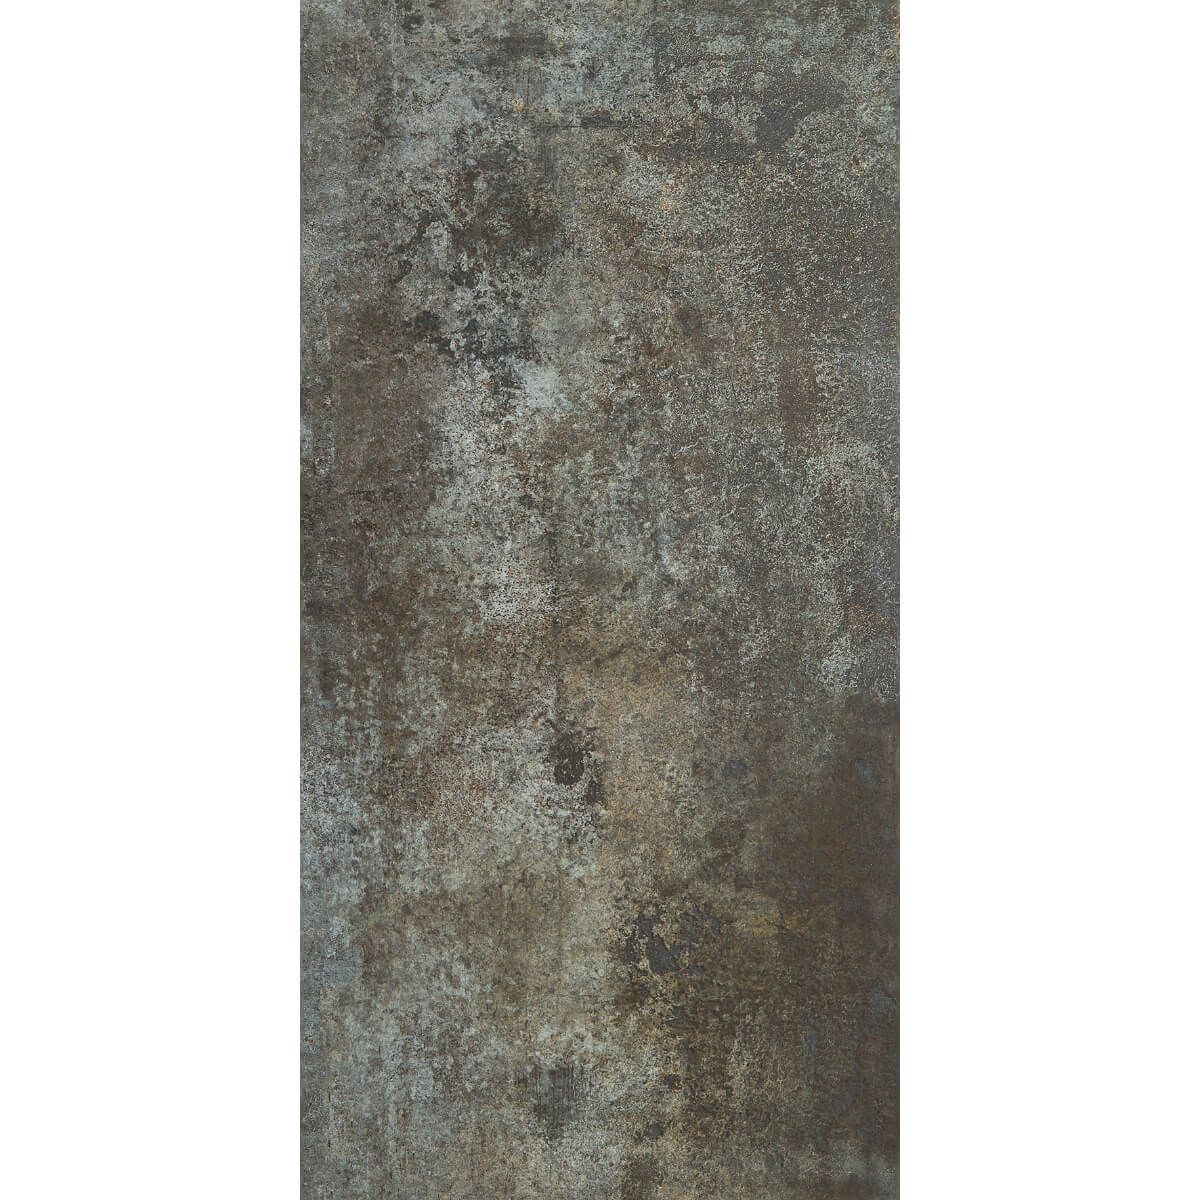 Gres Rusty Metal Coal polerowany 120x60x1 cm